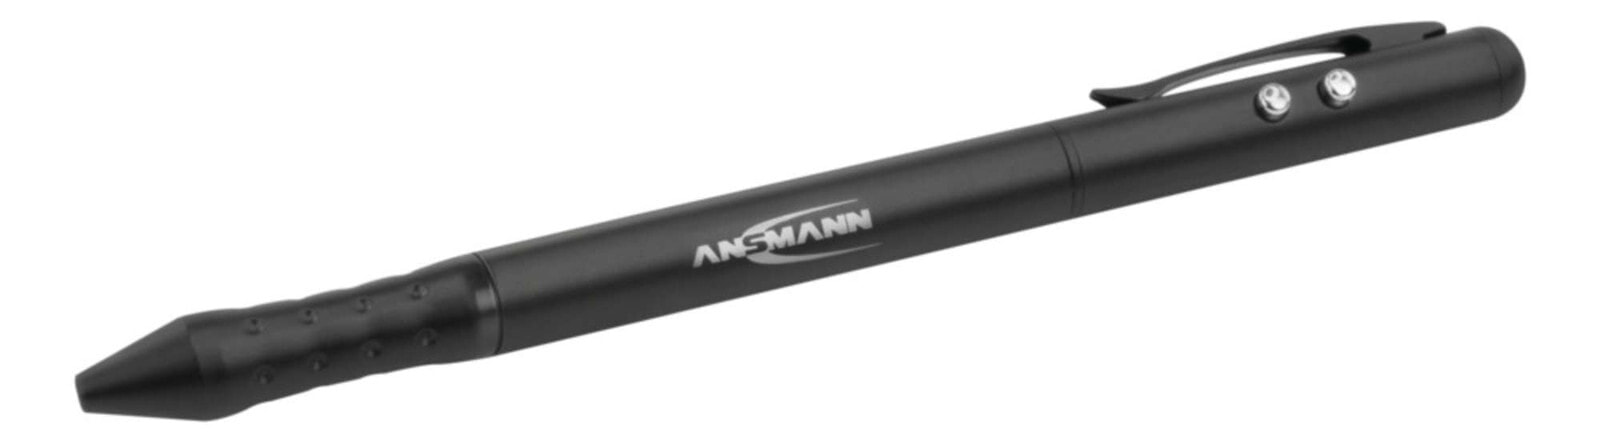 Ansmann 1600-0269 лазерный указатель 650 nm Черный